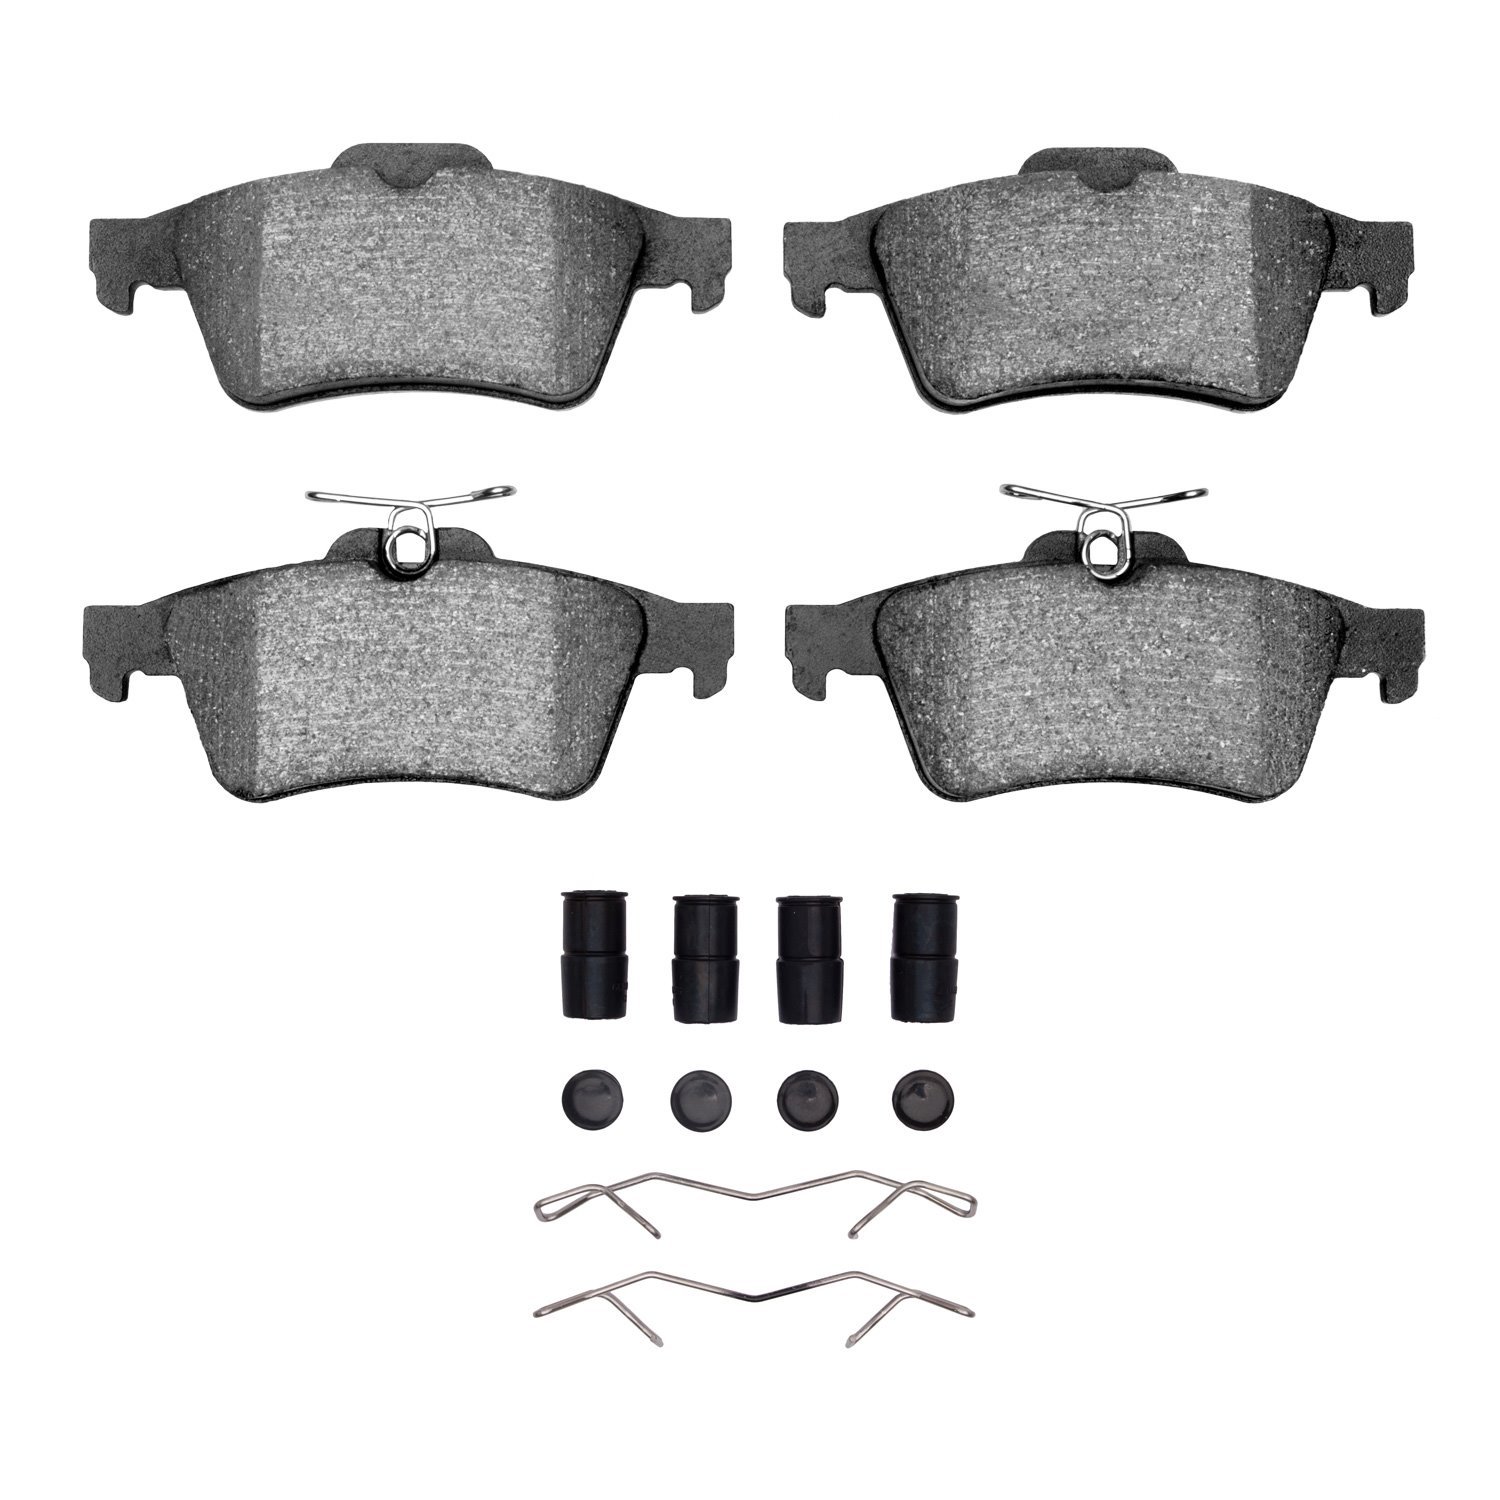 1600-1095-01 5000 Euro Ceramic Brake Pads & Hardware Kit, Fits Select Multiple Makes/Models, Position: Rear